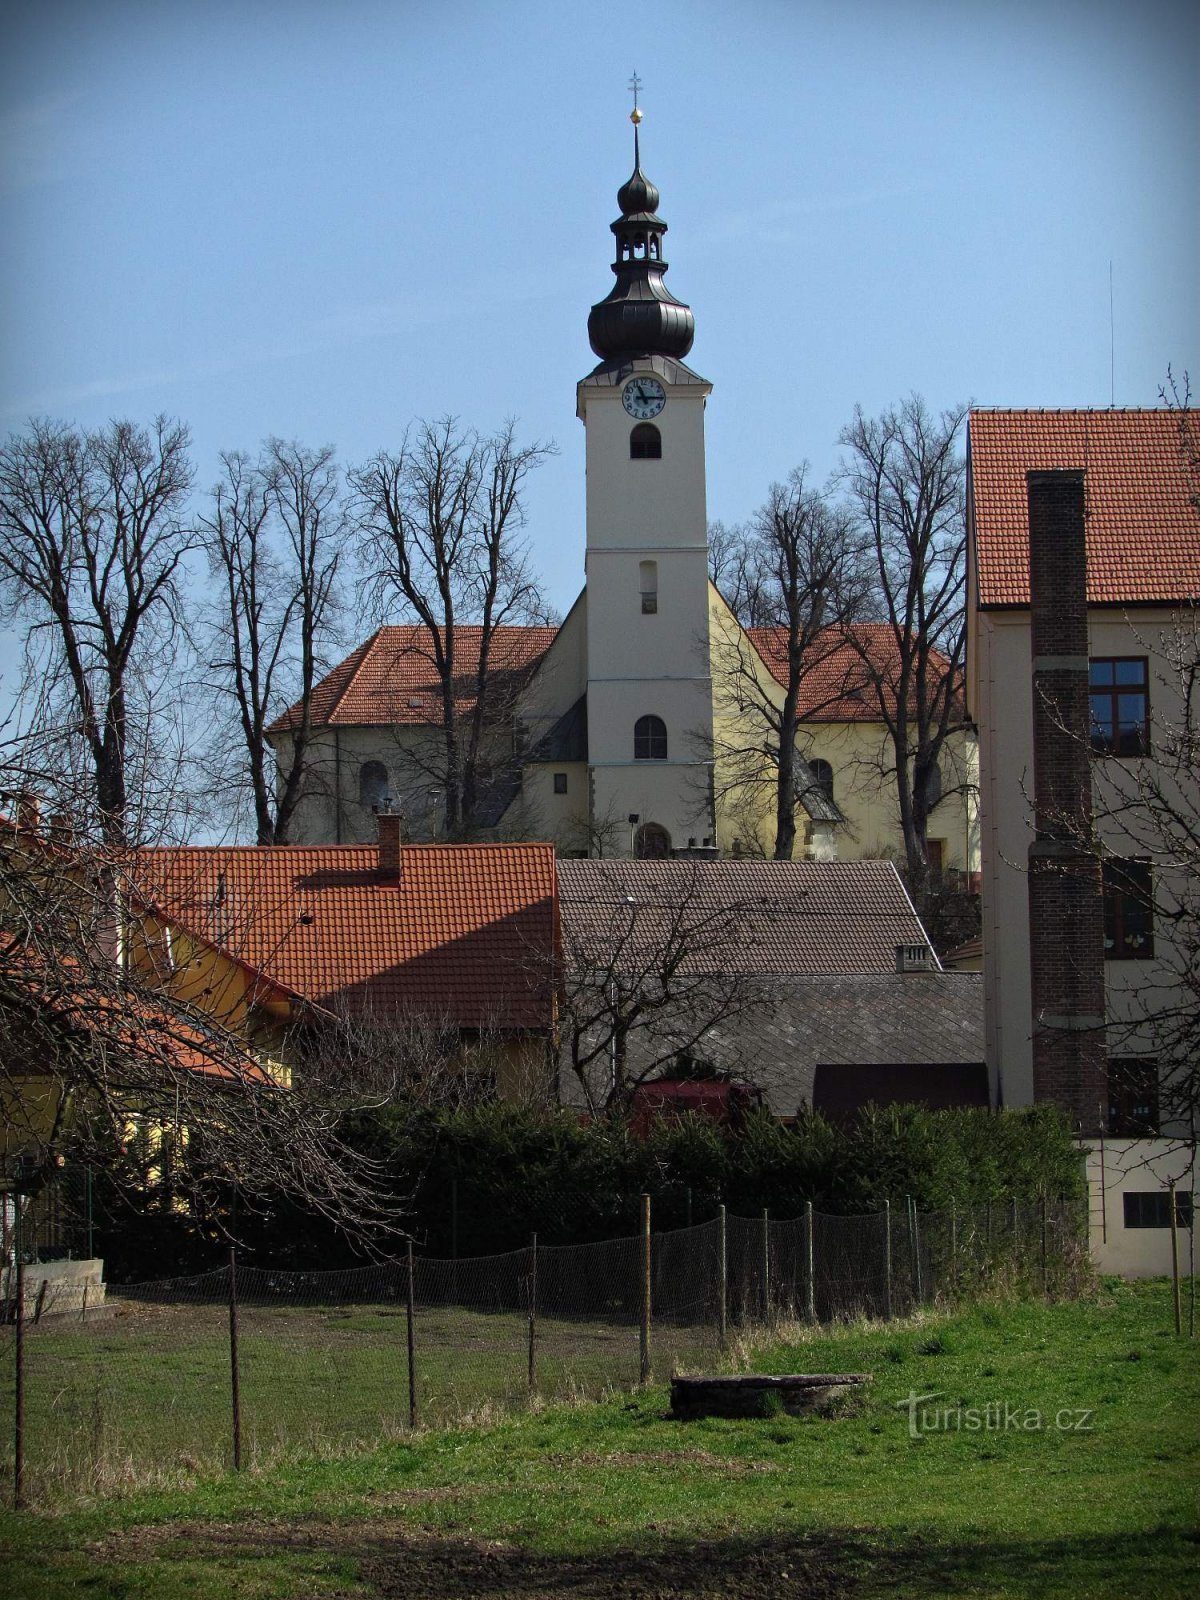 St.-Wenzels-Kirche in Brum